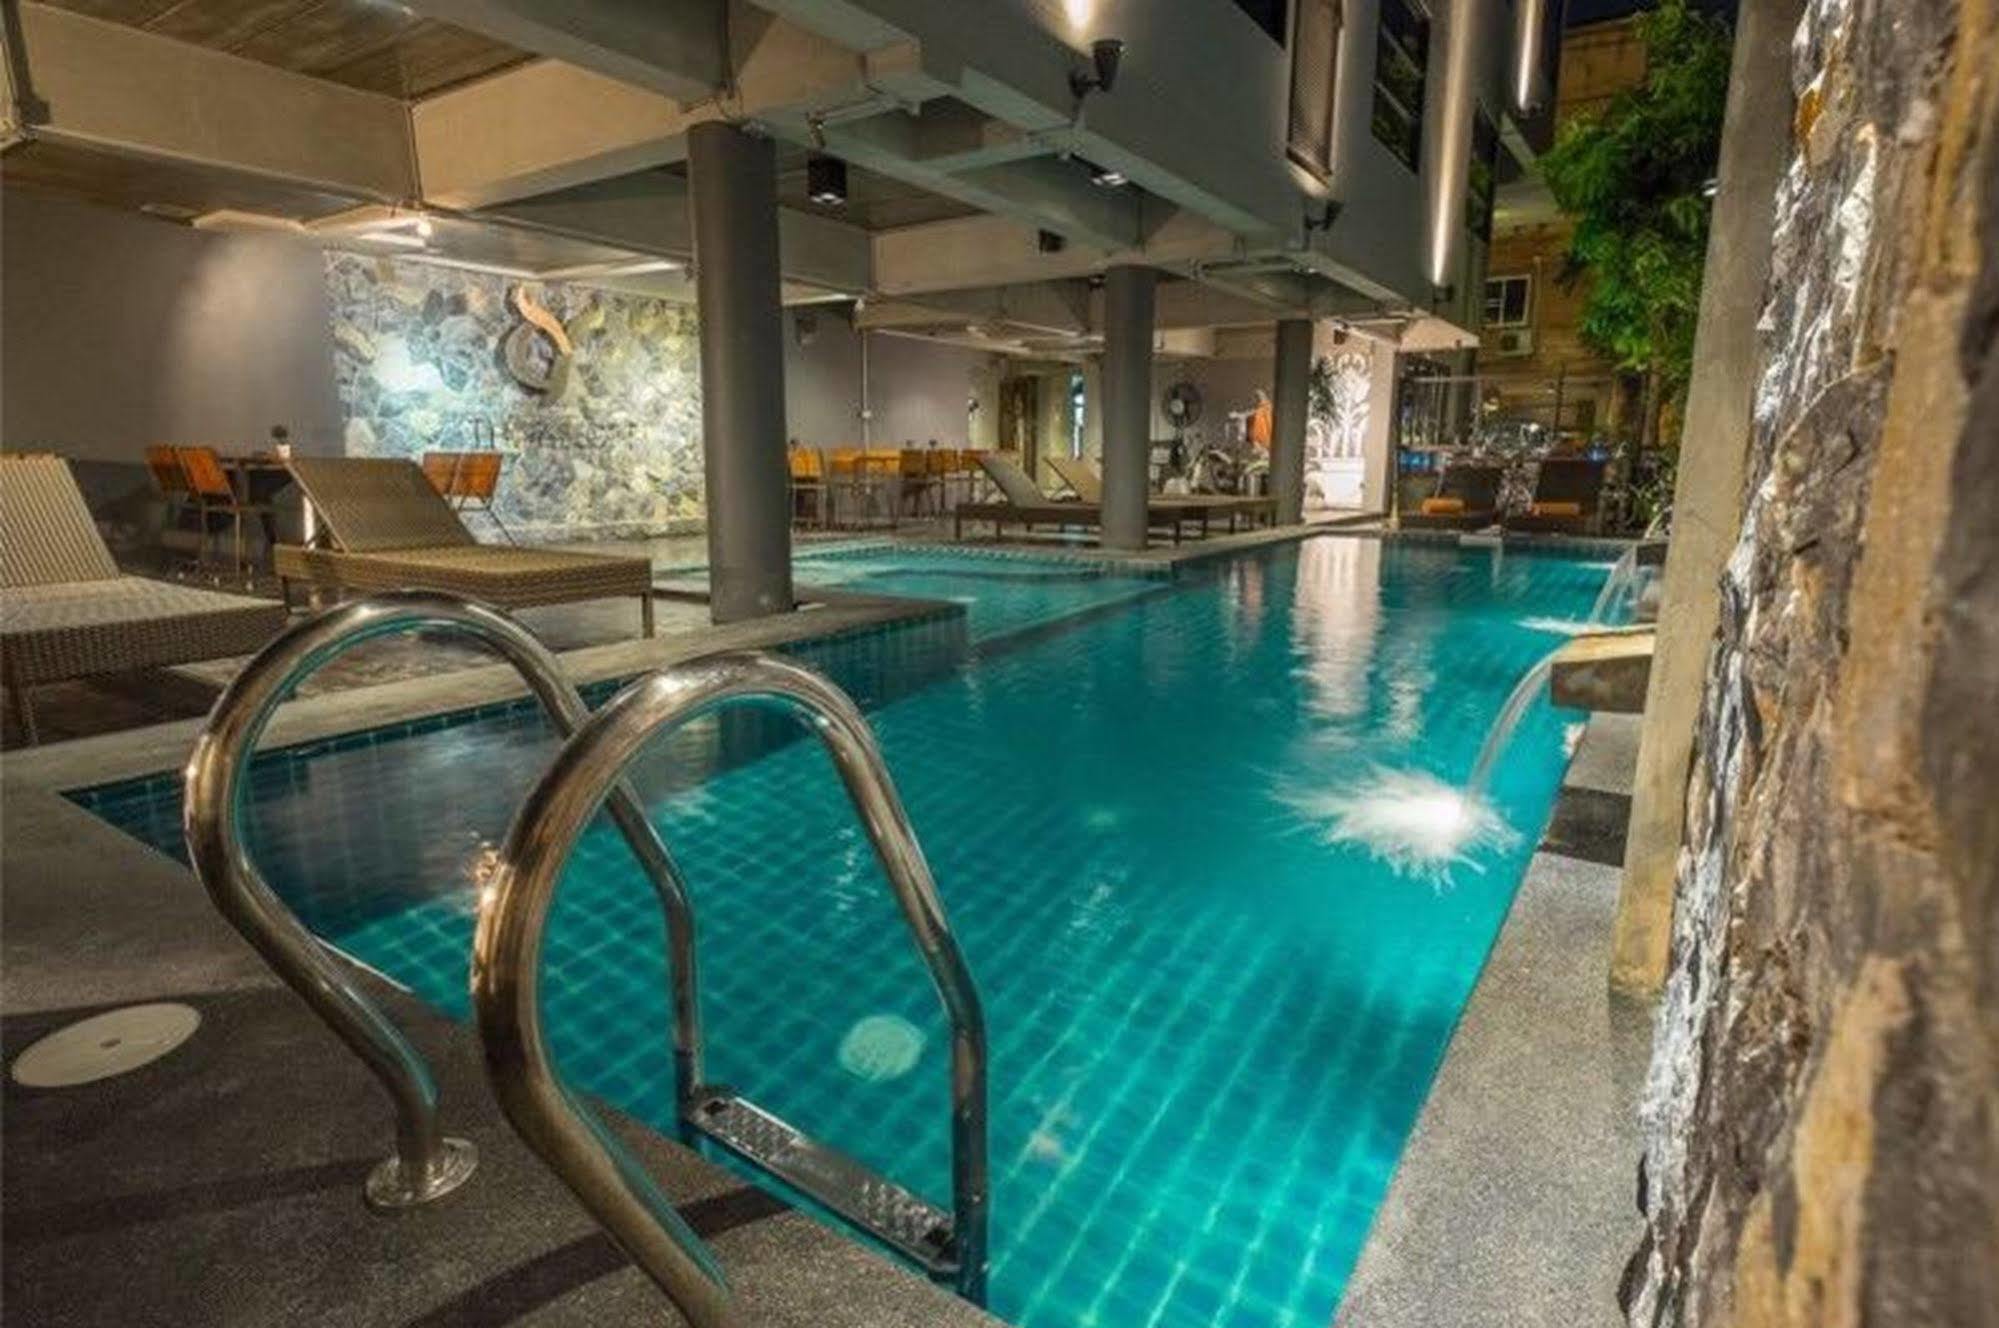 Hotel Thapae Loft Chiang Mai Esterno foto